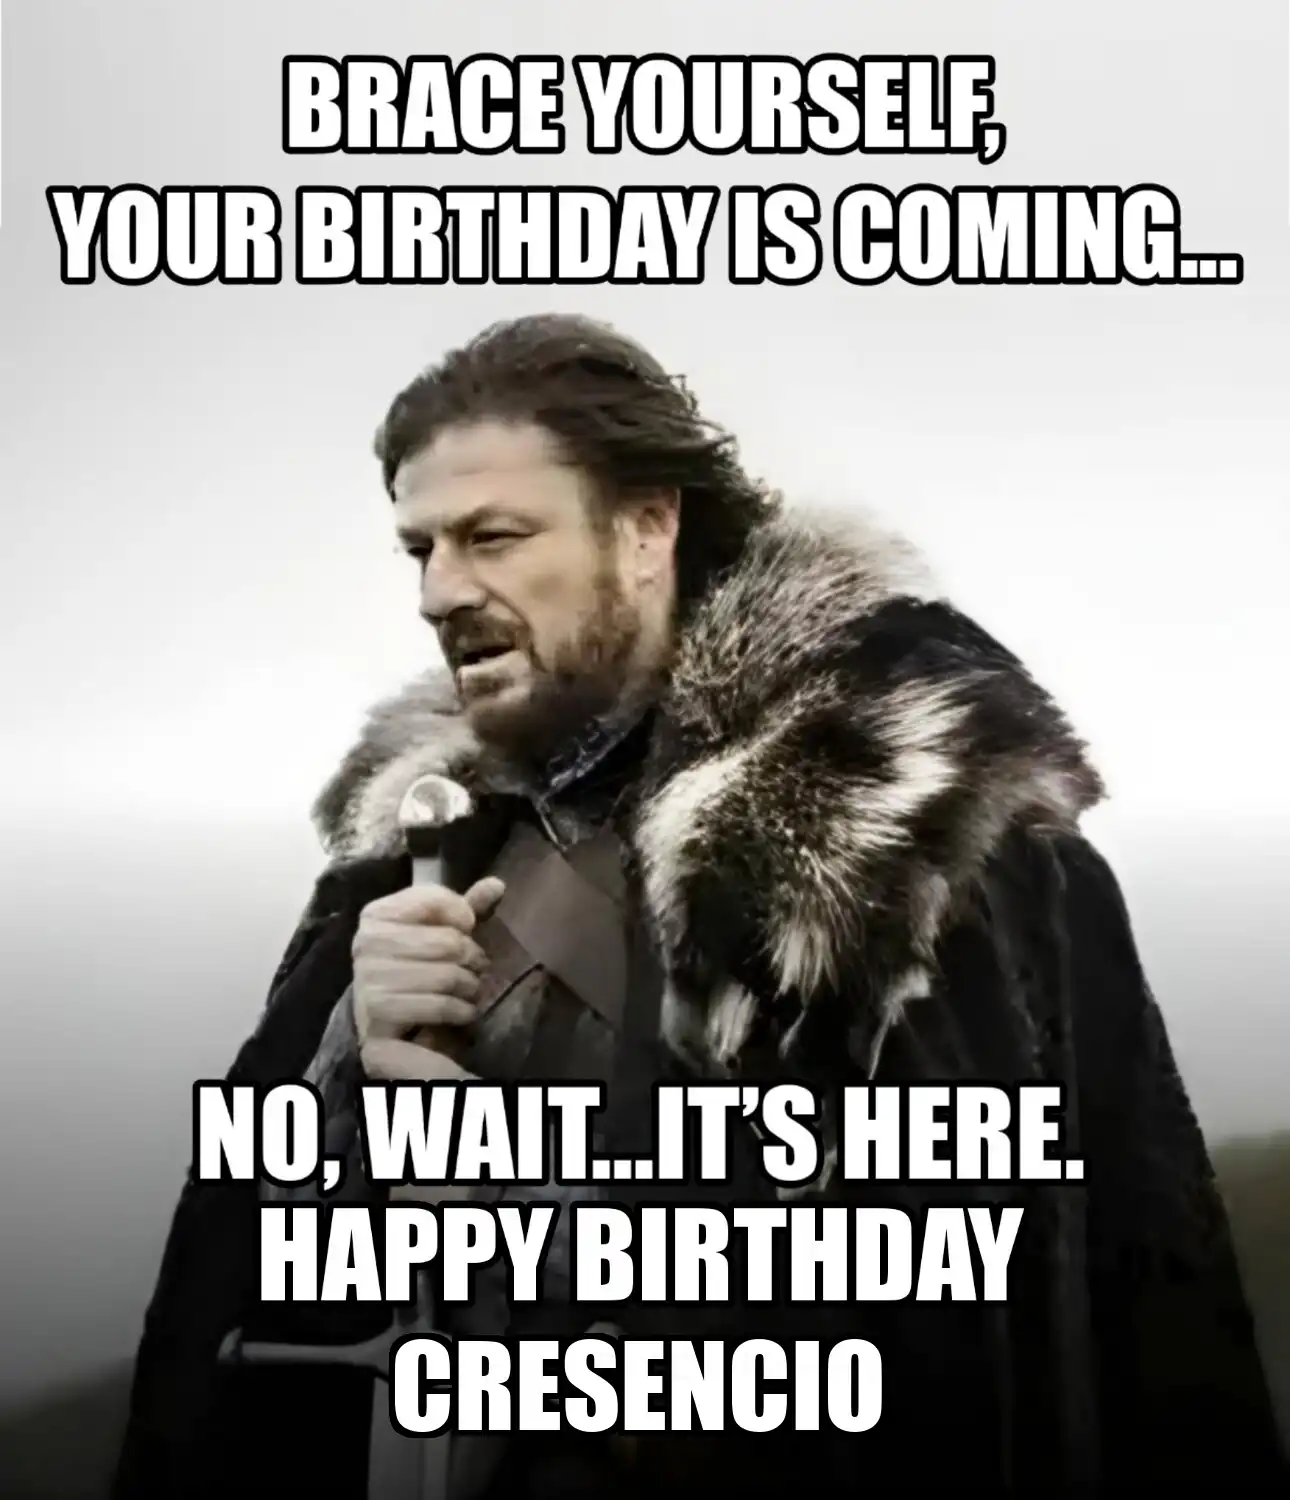 Happy Birthday Cresencio Brace Yourself Your Birthday Is Coming Meme